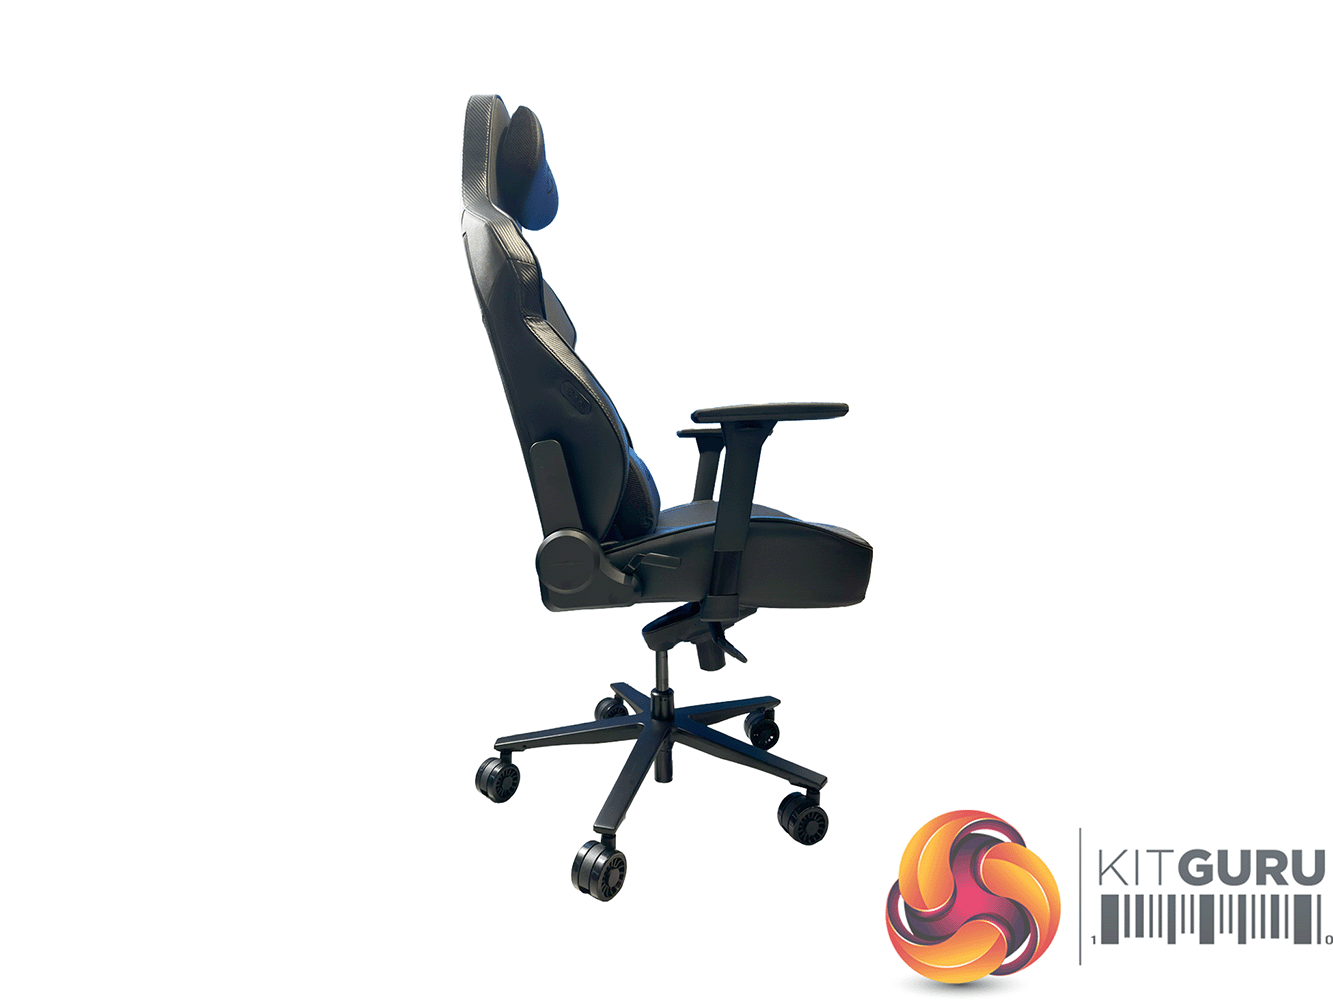 Cougar's NxSys Aero gaming chair didn't blow me away, but it sure kept me  cool